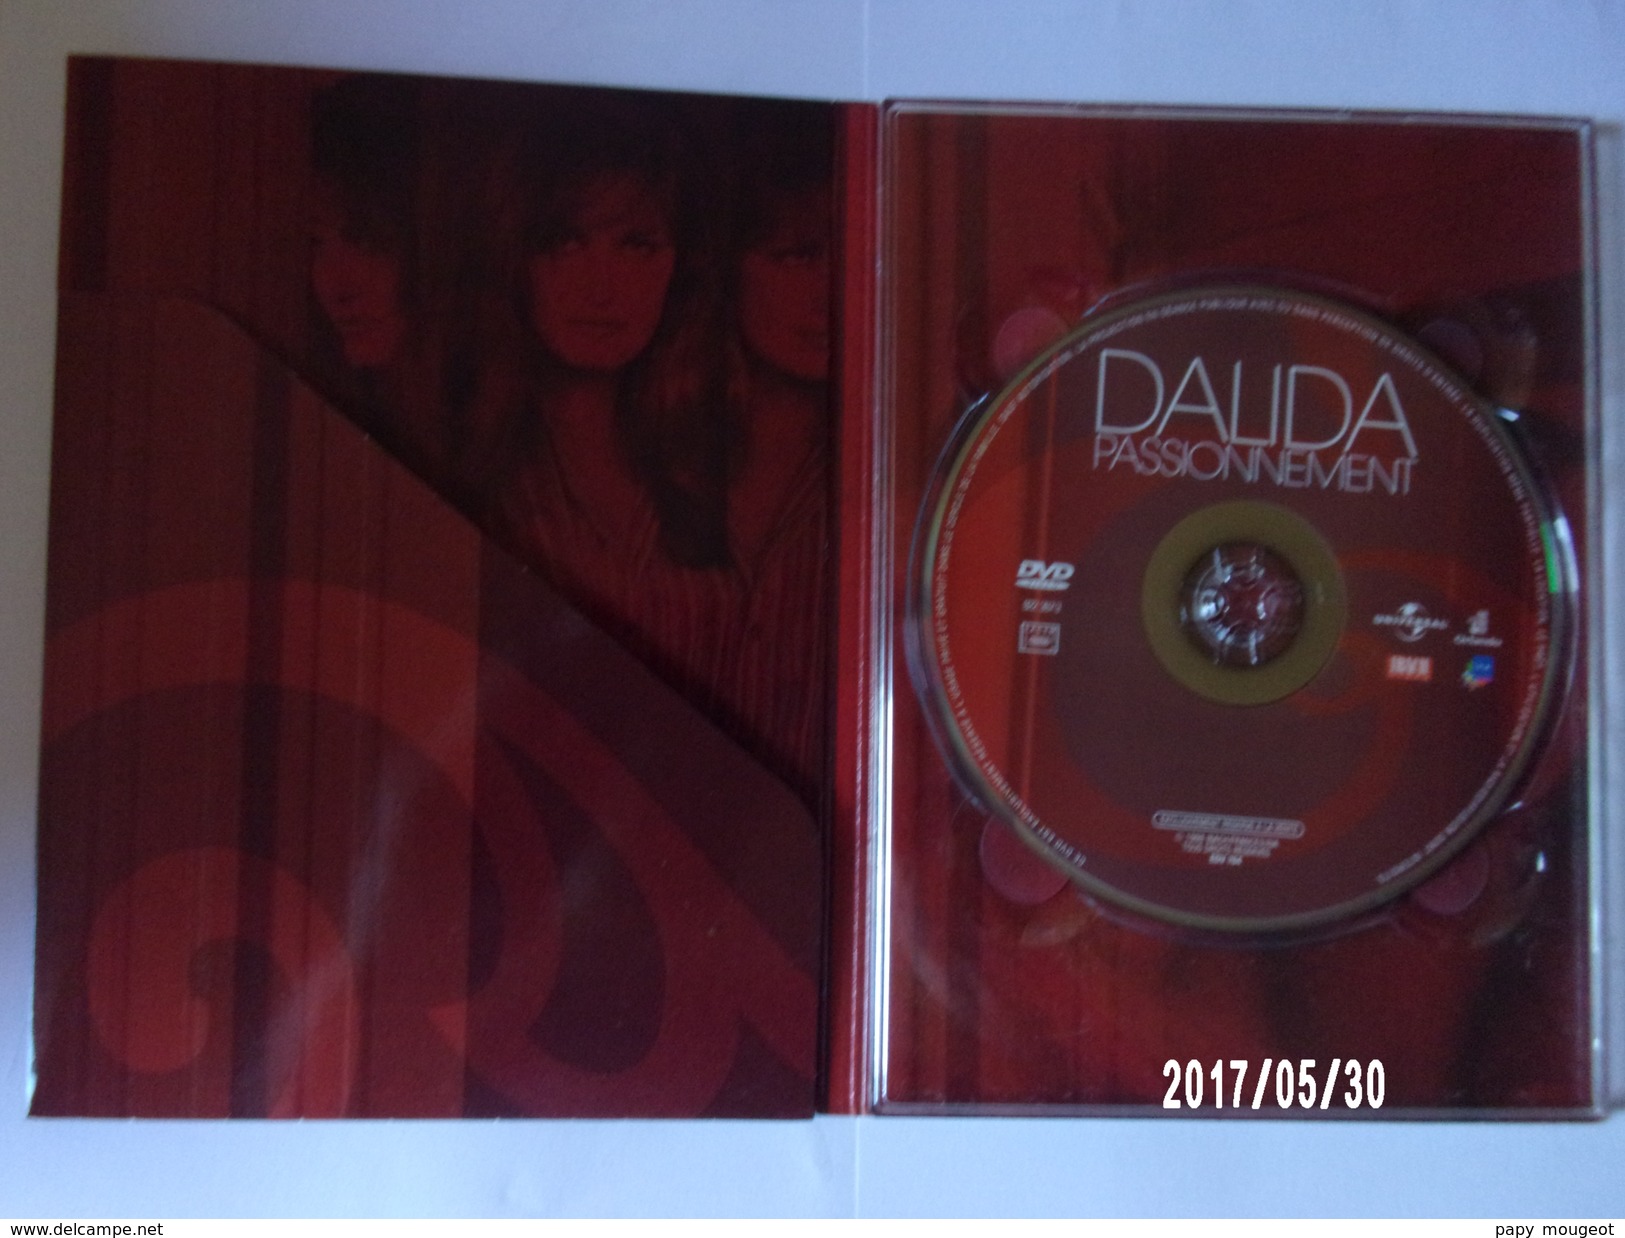 Dalida Passionnement - Musik-DVD's